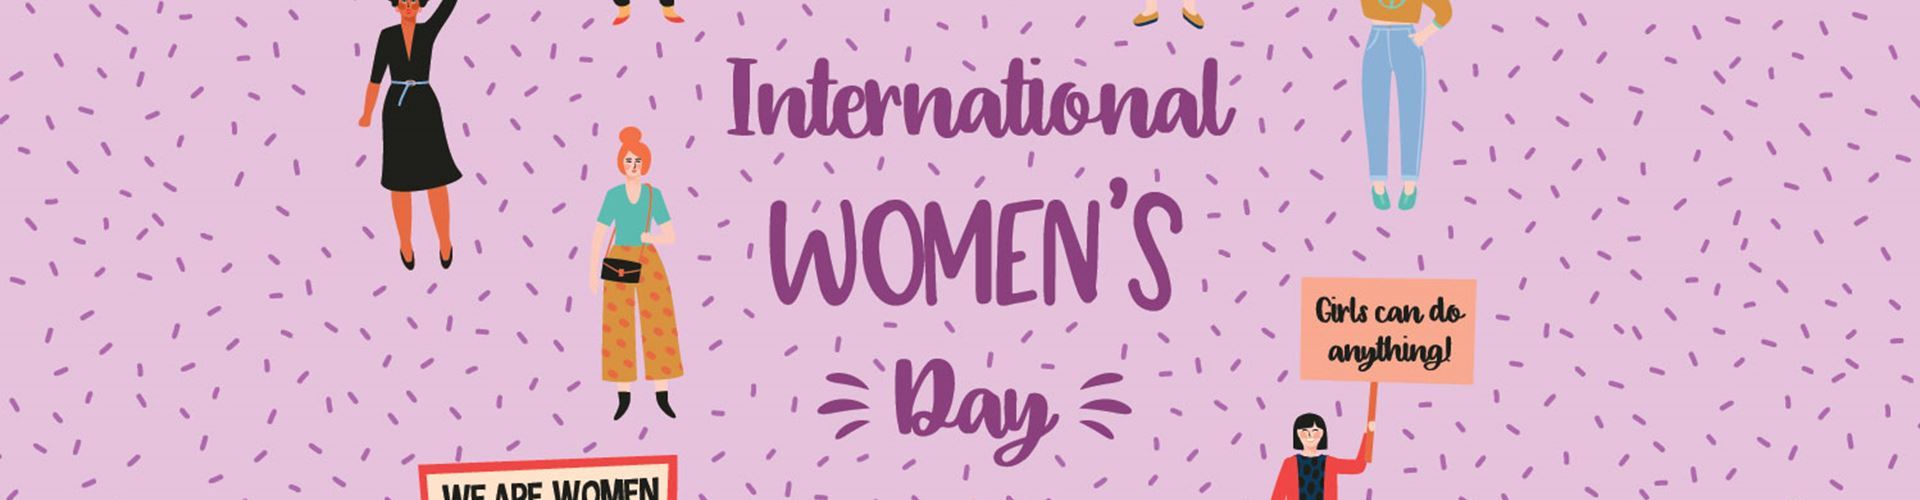 Better balance with International Women’s Day 2019